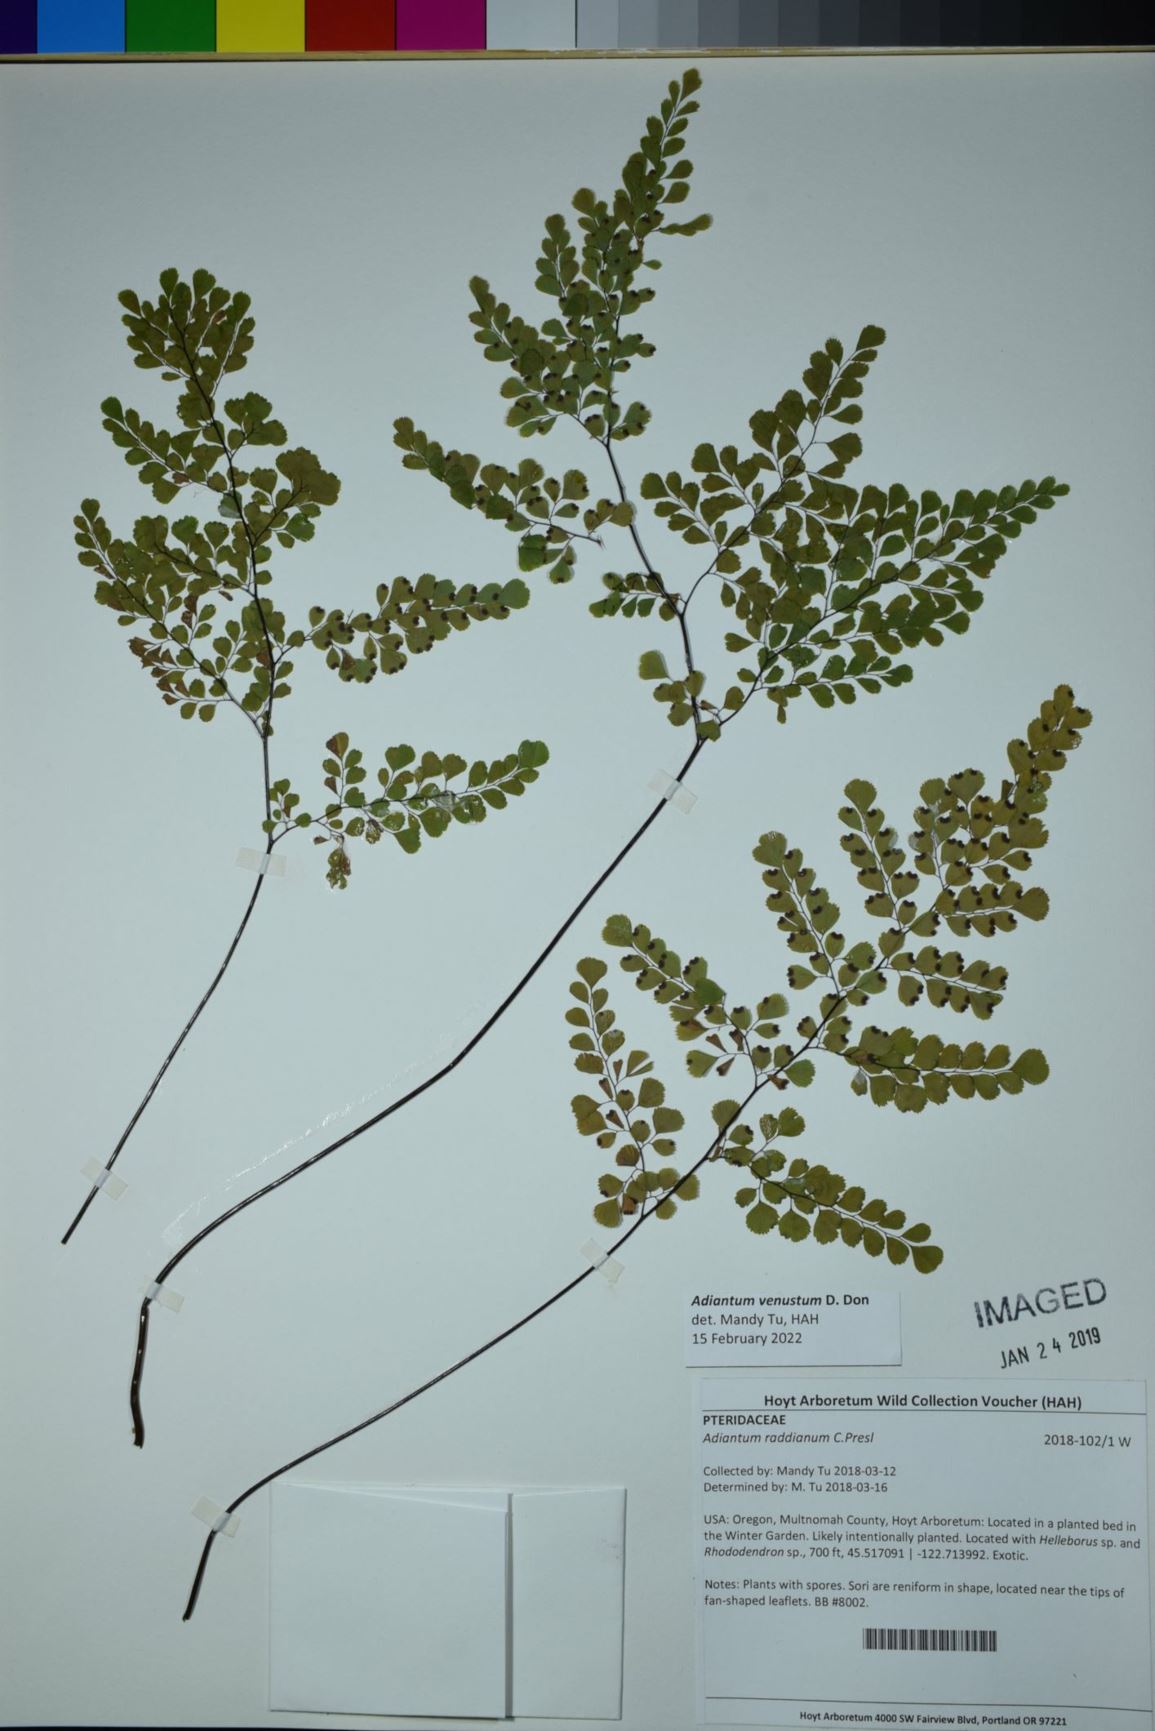 Adiantum venustum - Himalayan maidenhair fern